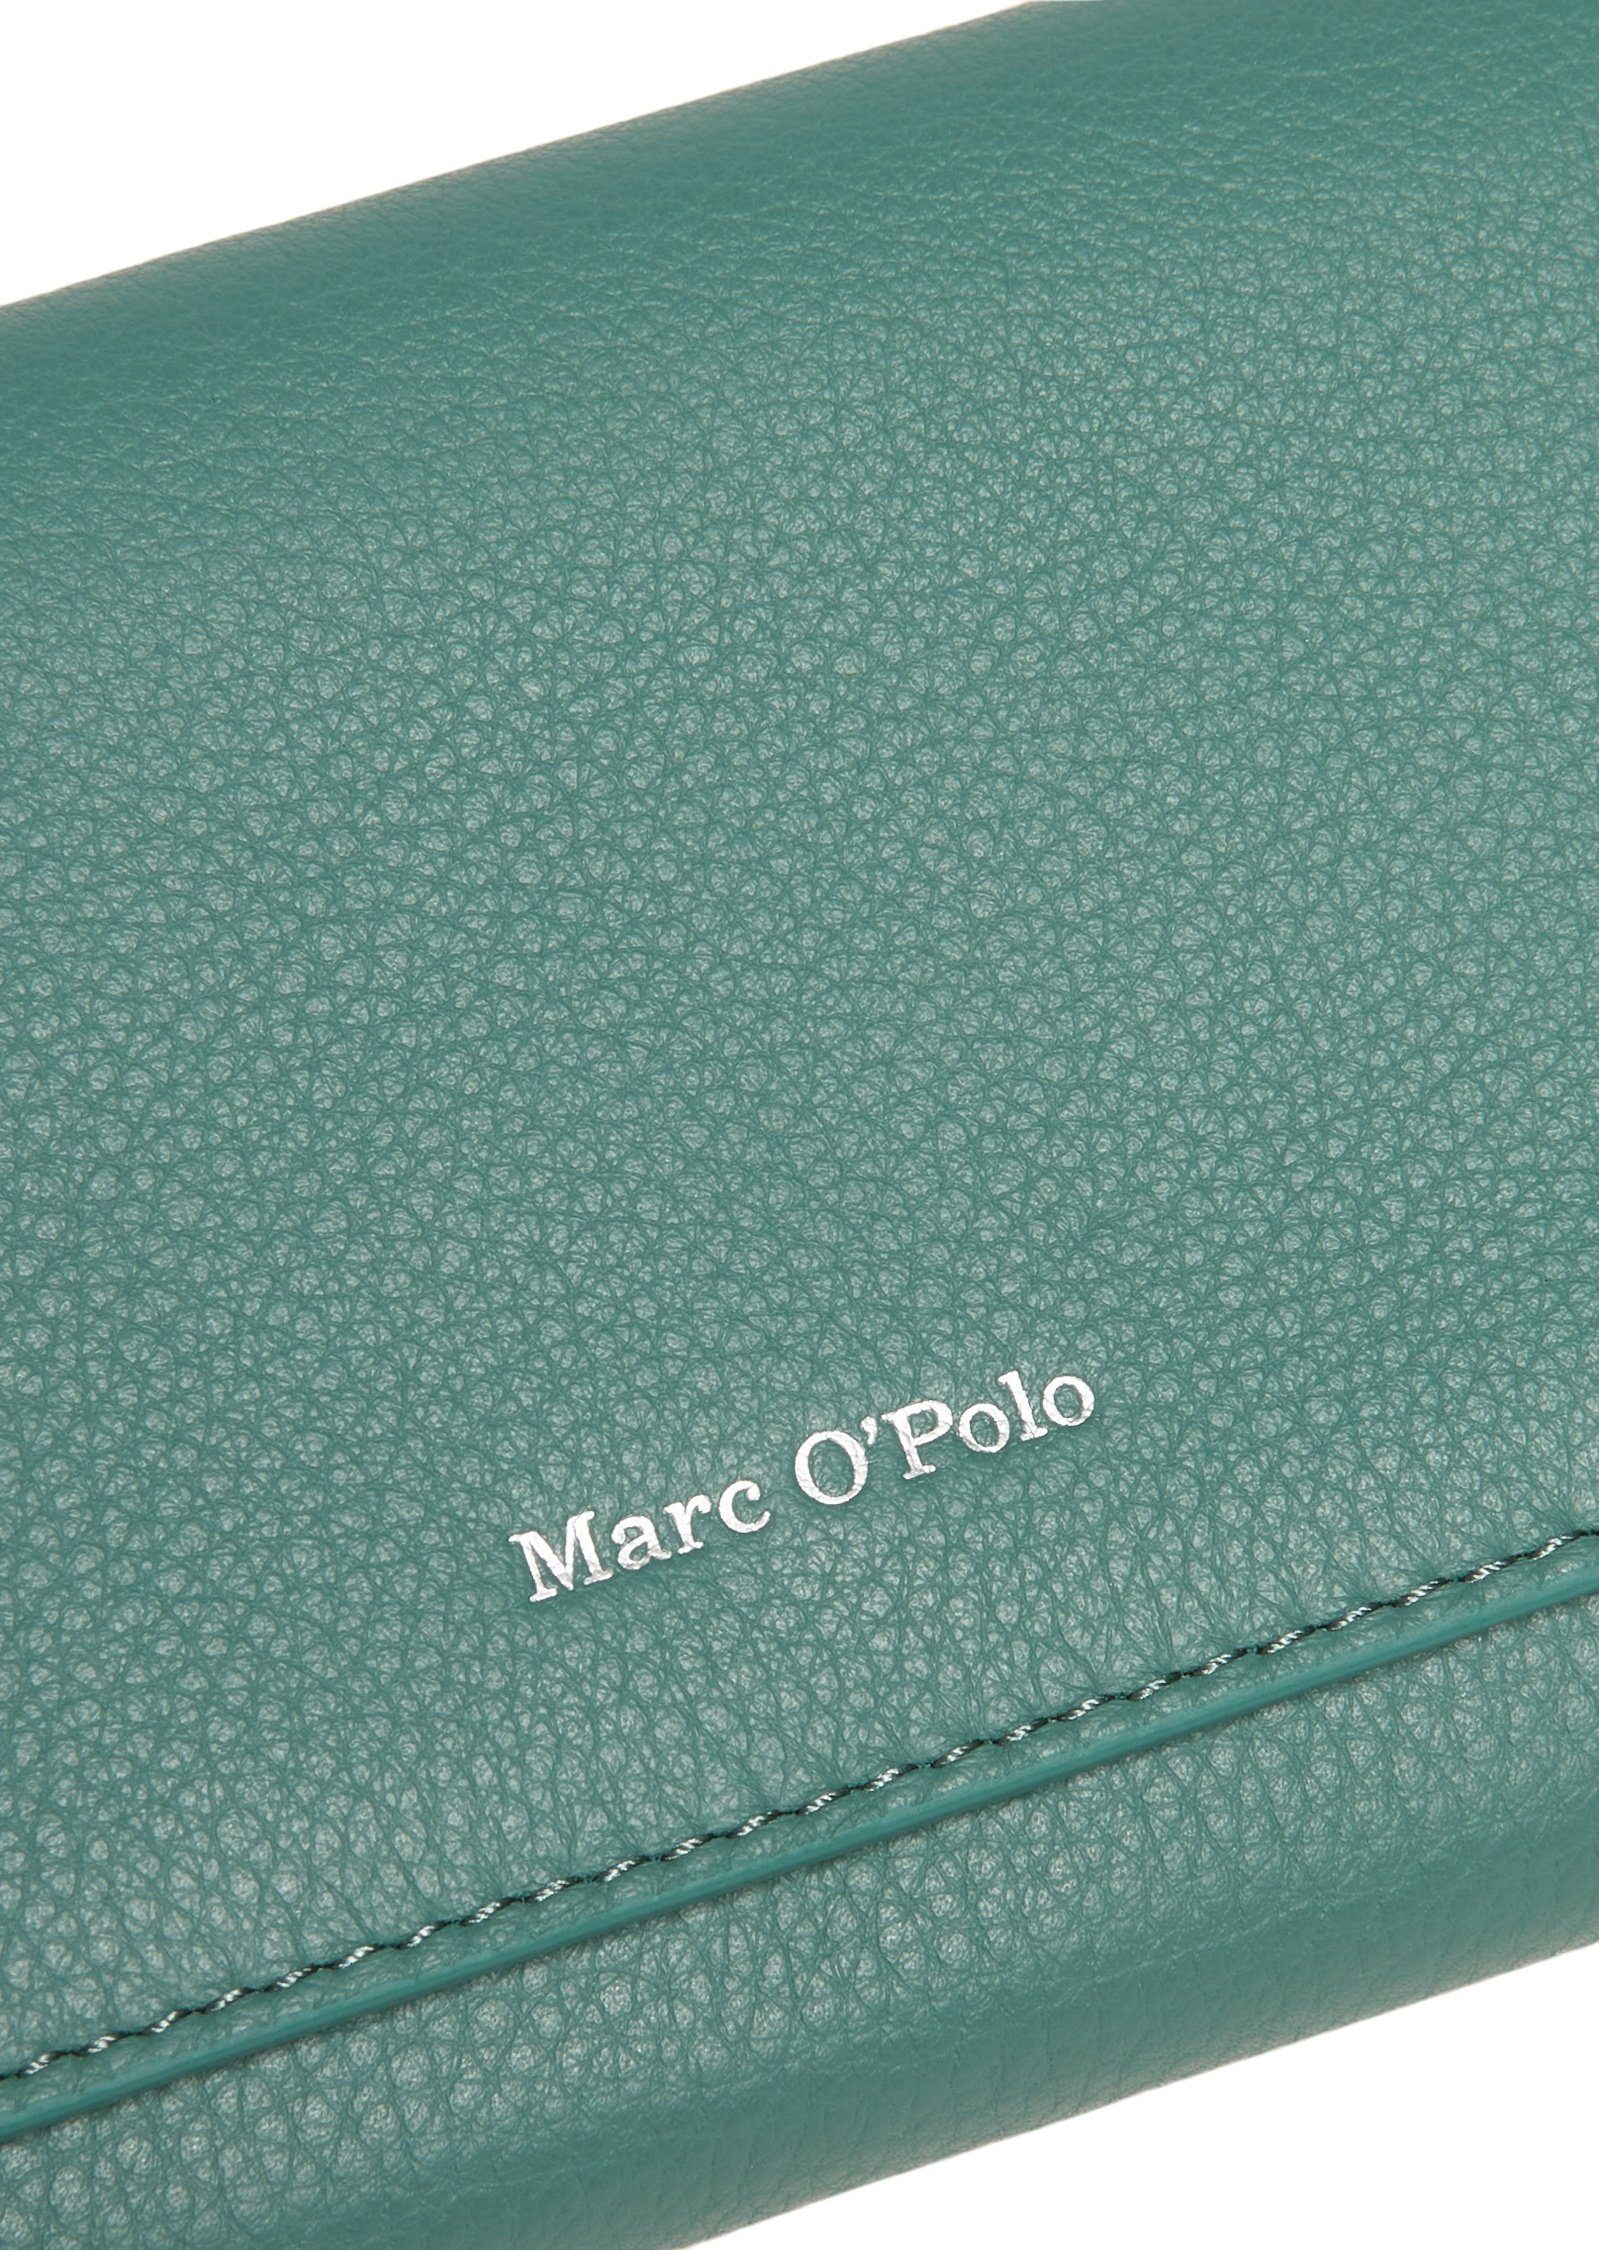 Rindsleder grün feingenarbtem O'Polo Geldbörse Marc aus